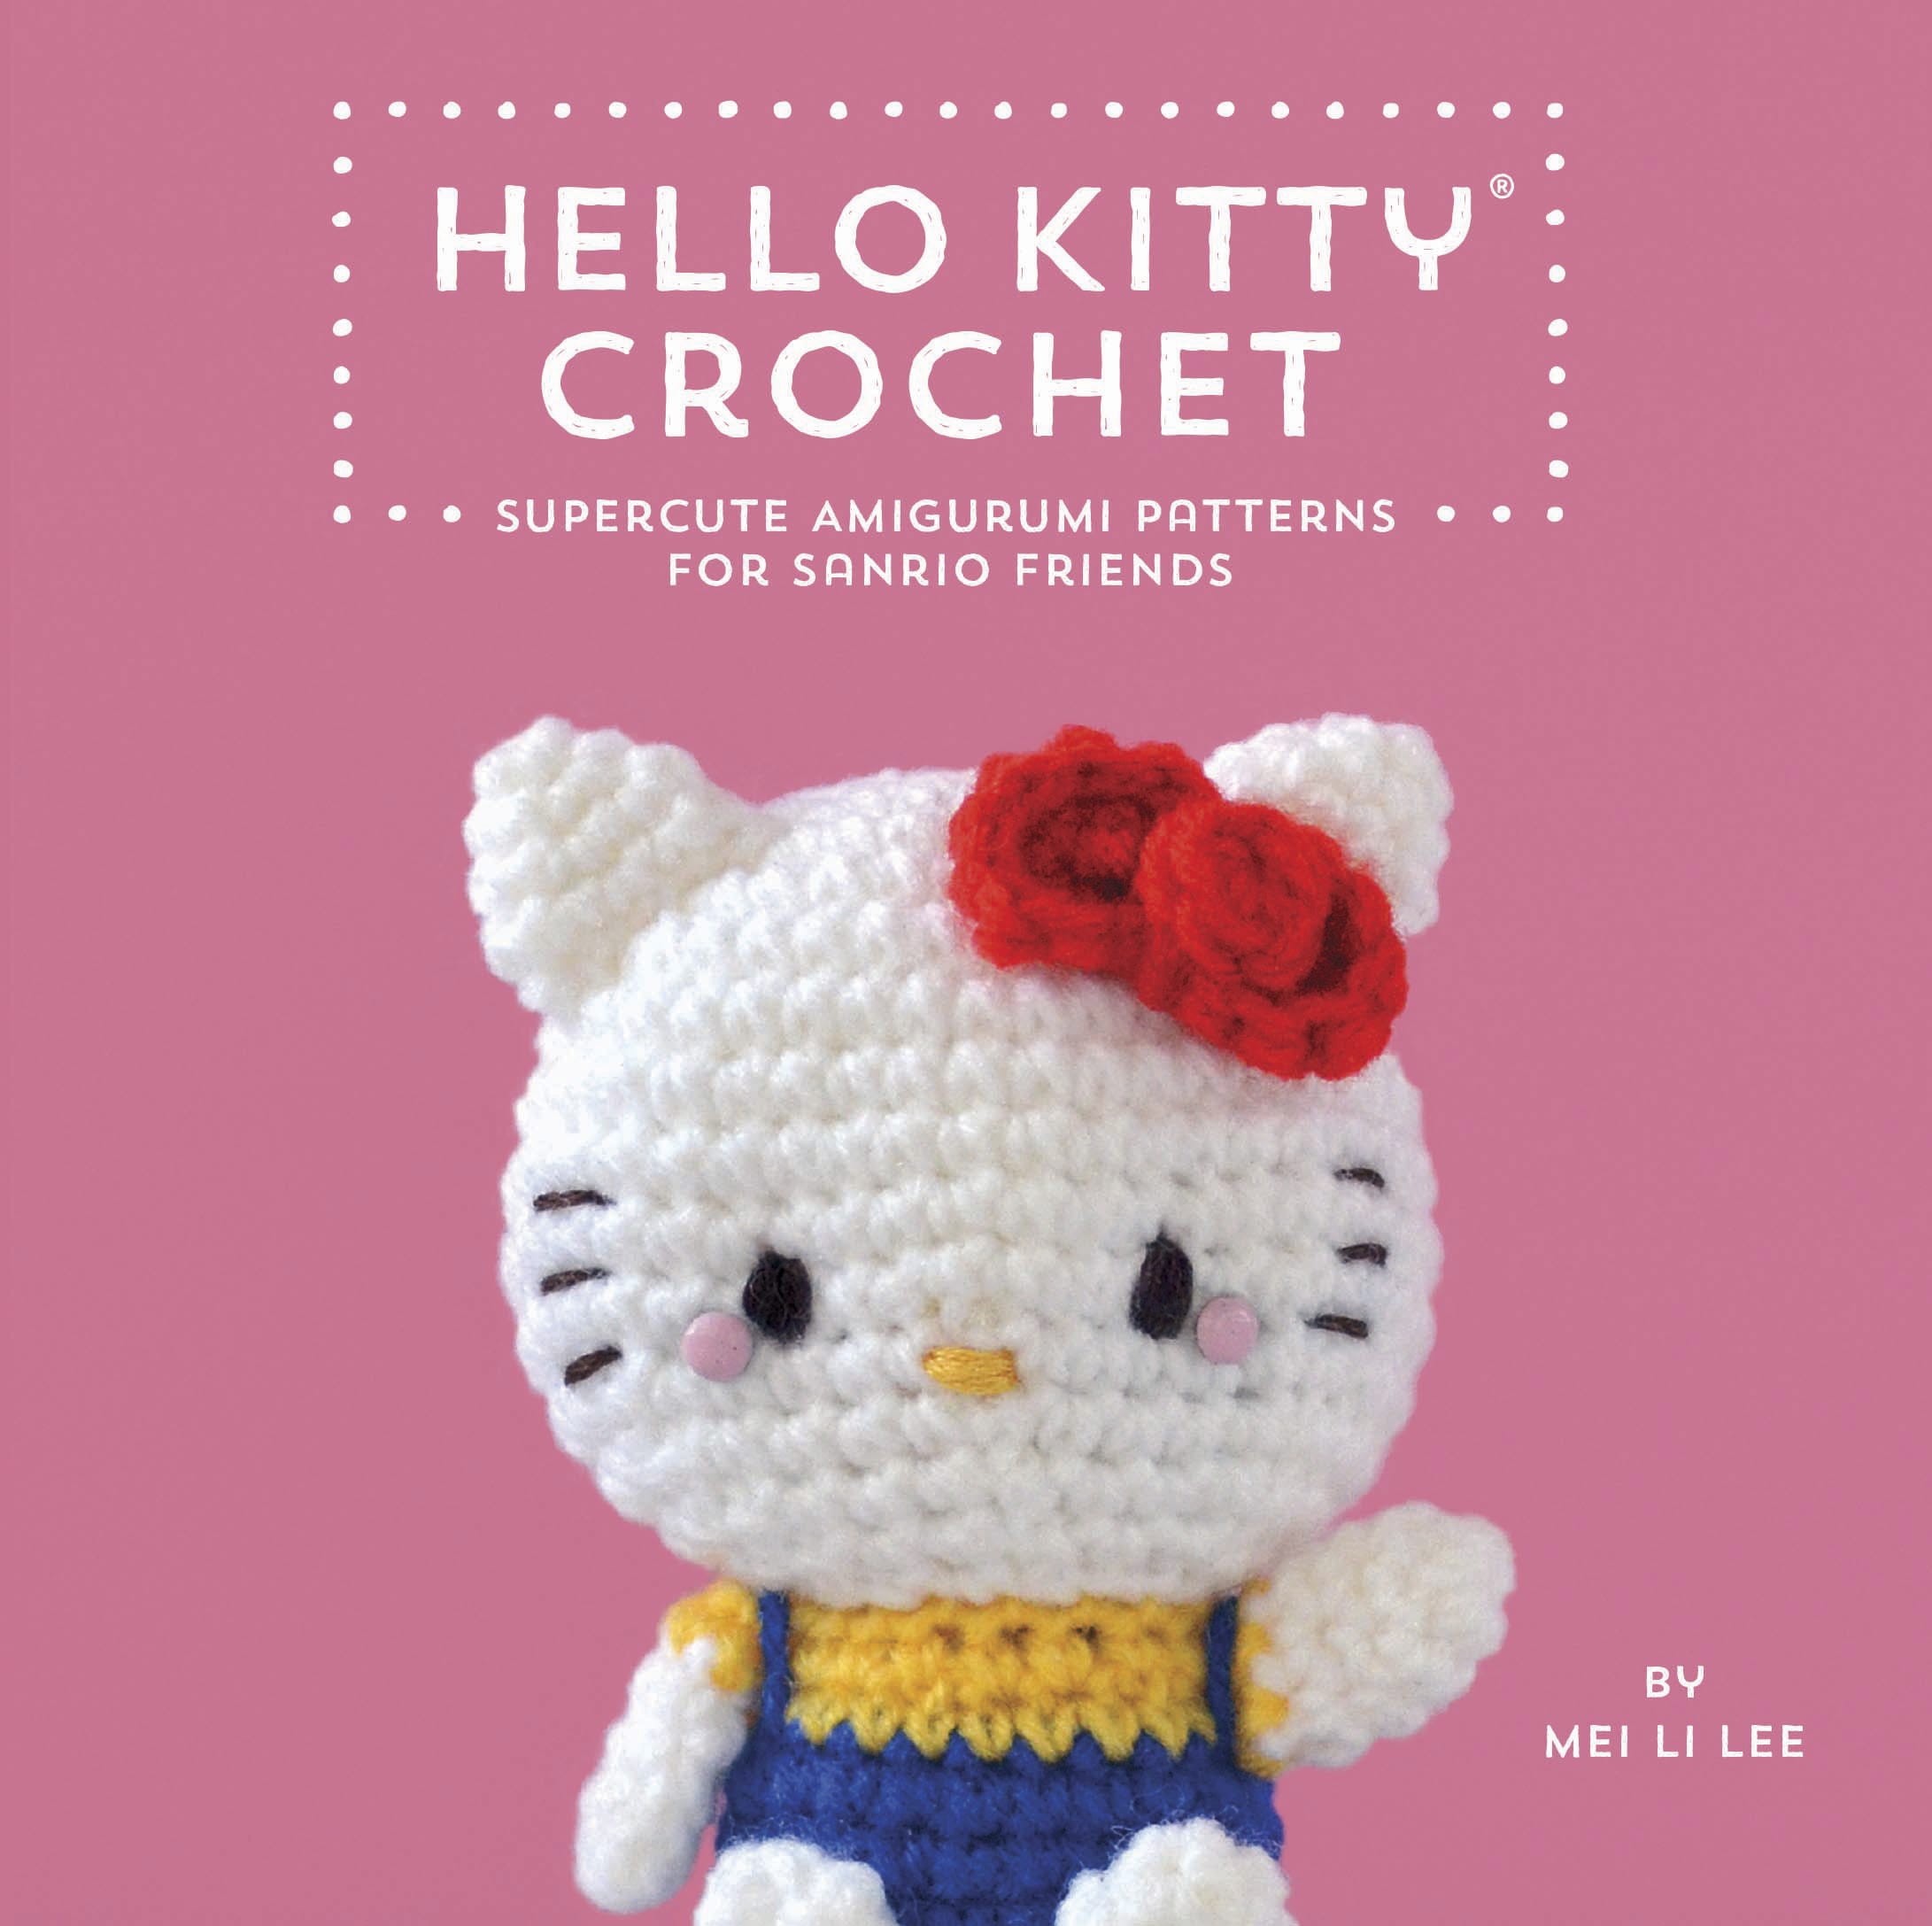 Quirk Books
&quot;Hello Kitty Crochet: Supercute Amigurumi Patterns for Sanrio Friends&quot; by Mei Li Lee.